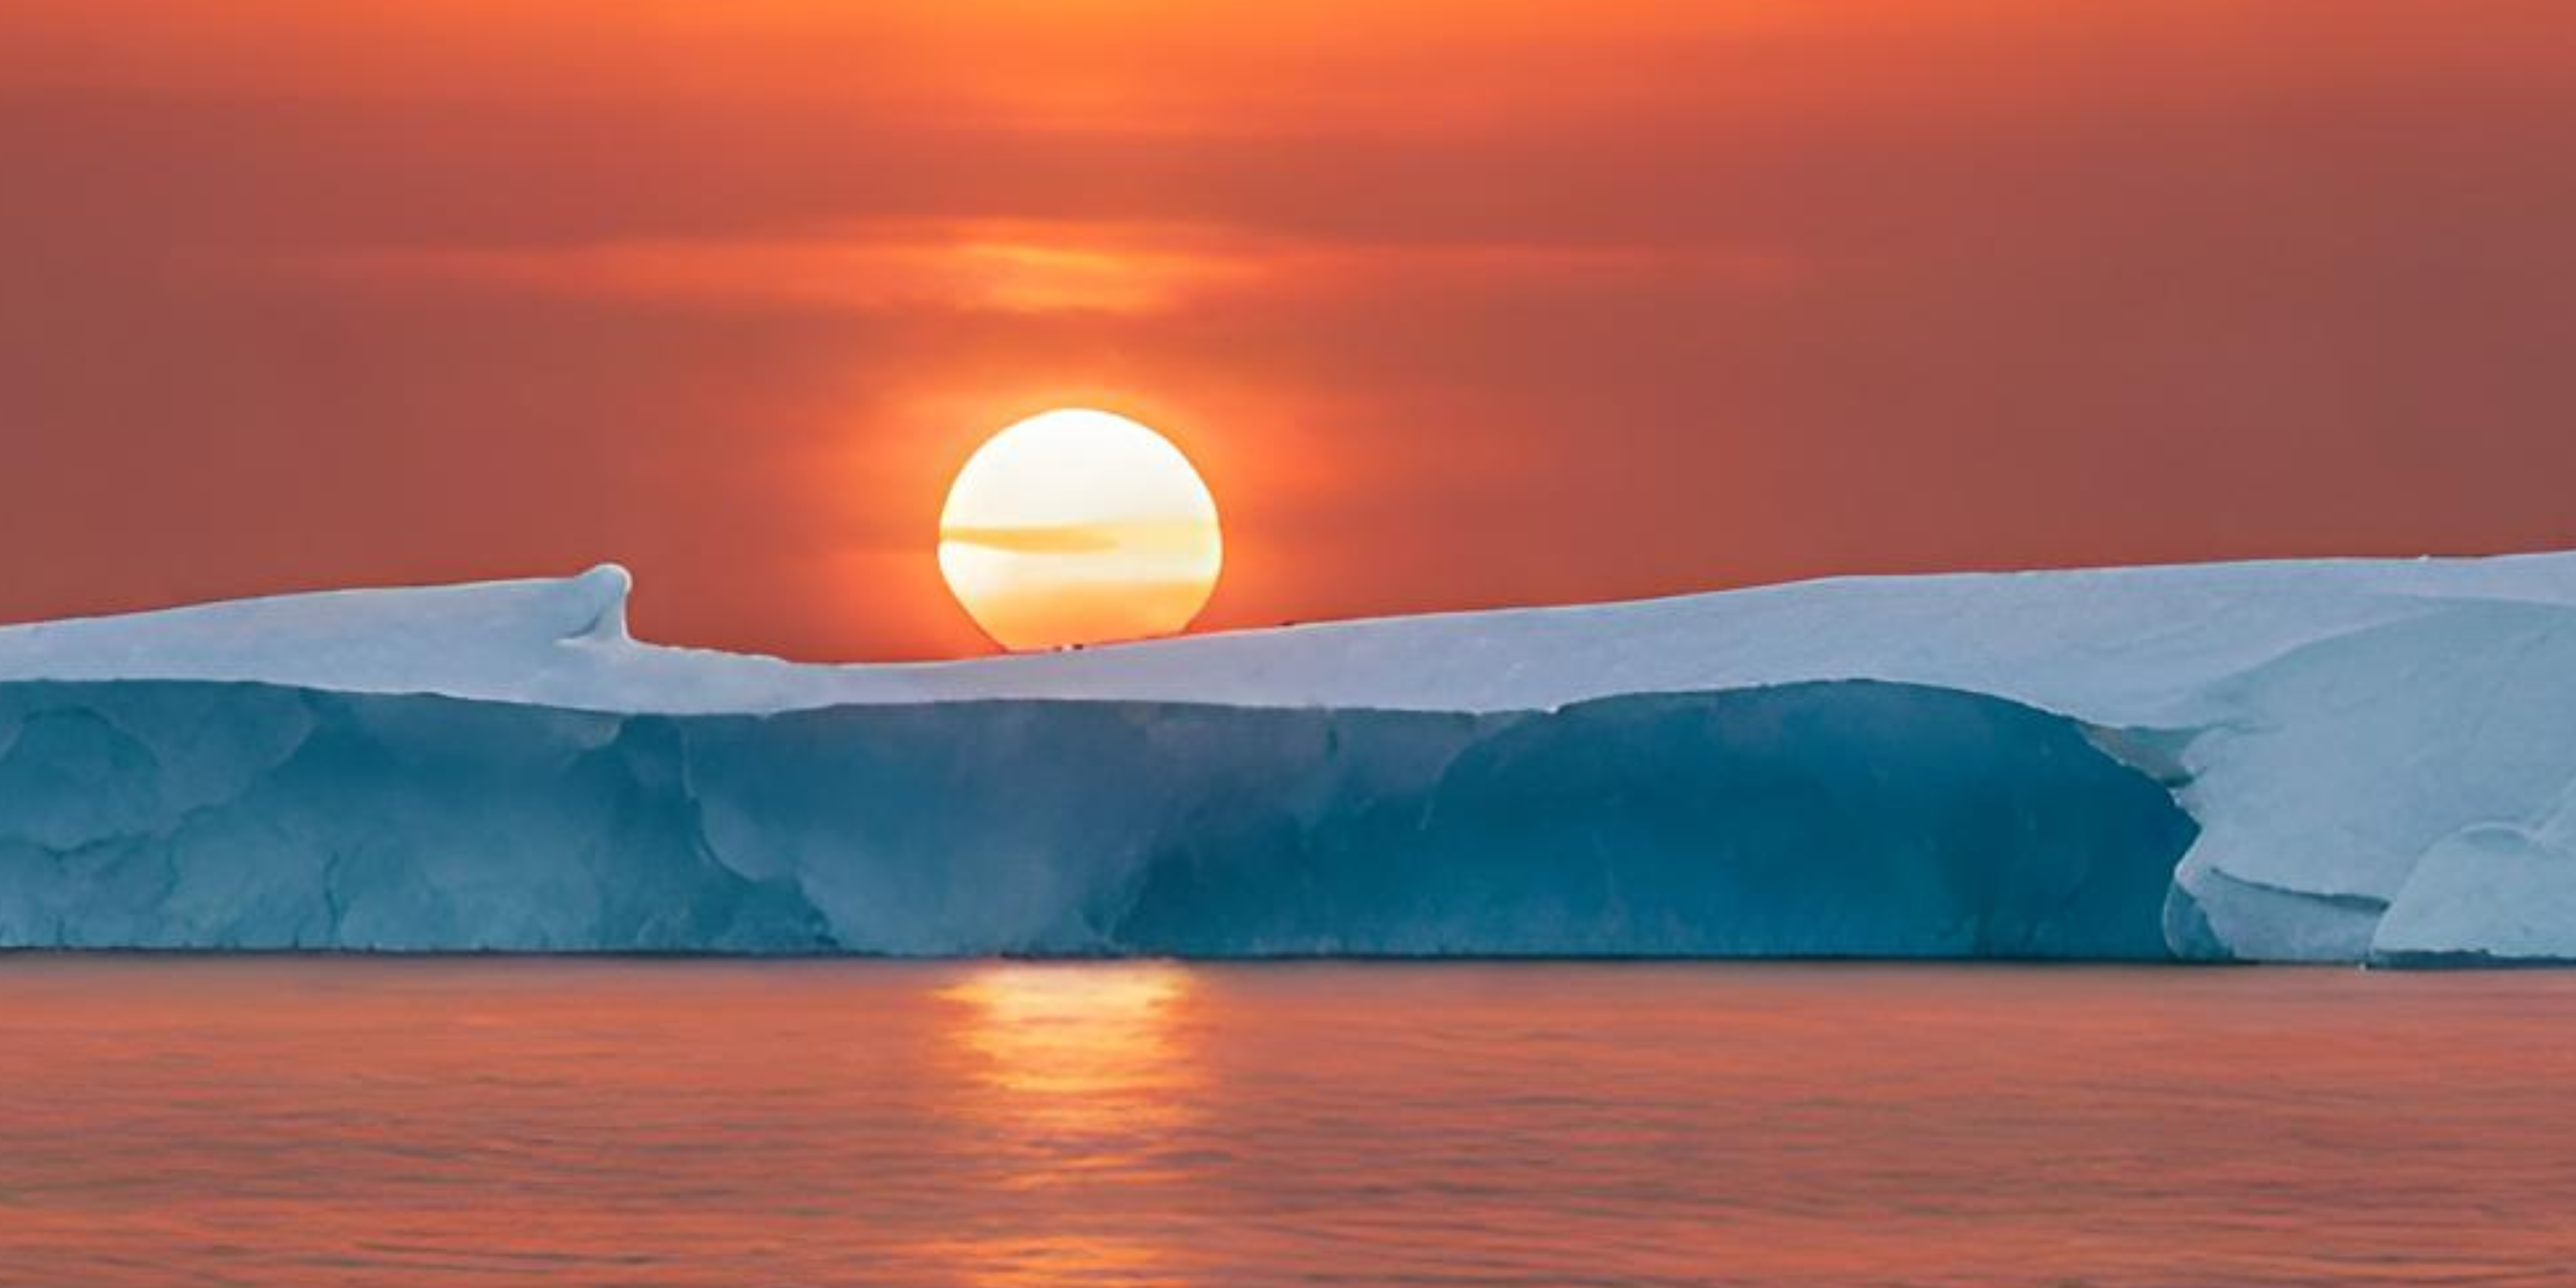 Iceberg in an orange sunset 